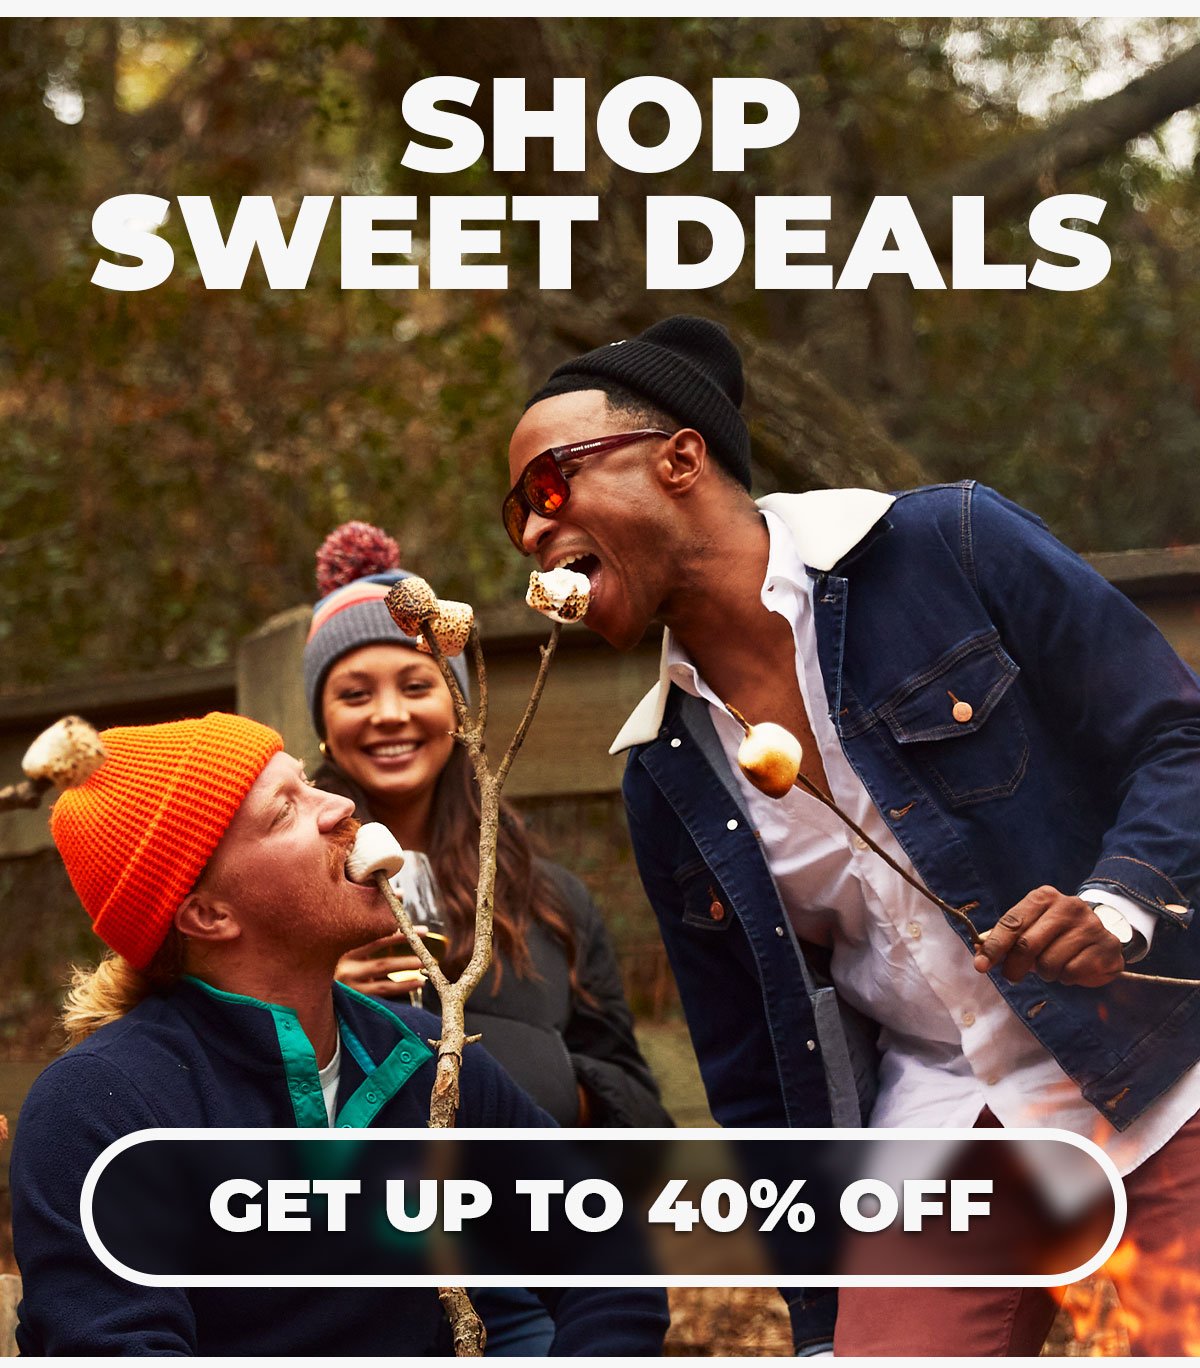 Shop Sweet Deals. Get up to 40% off.